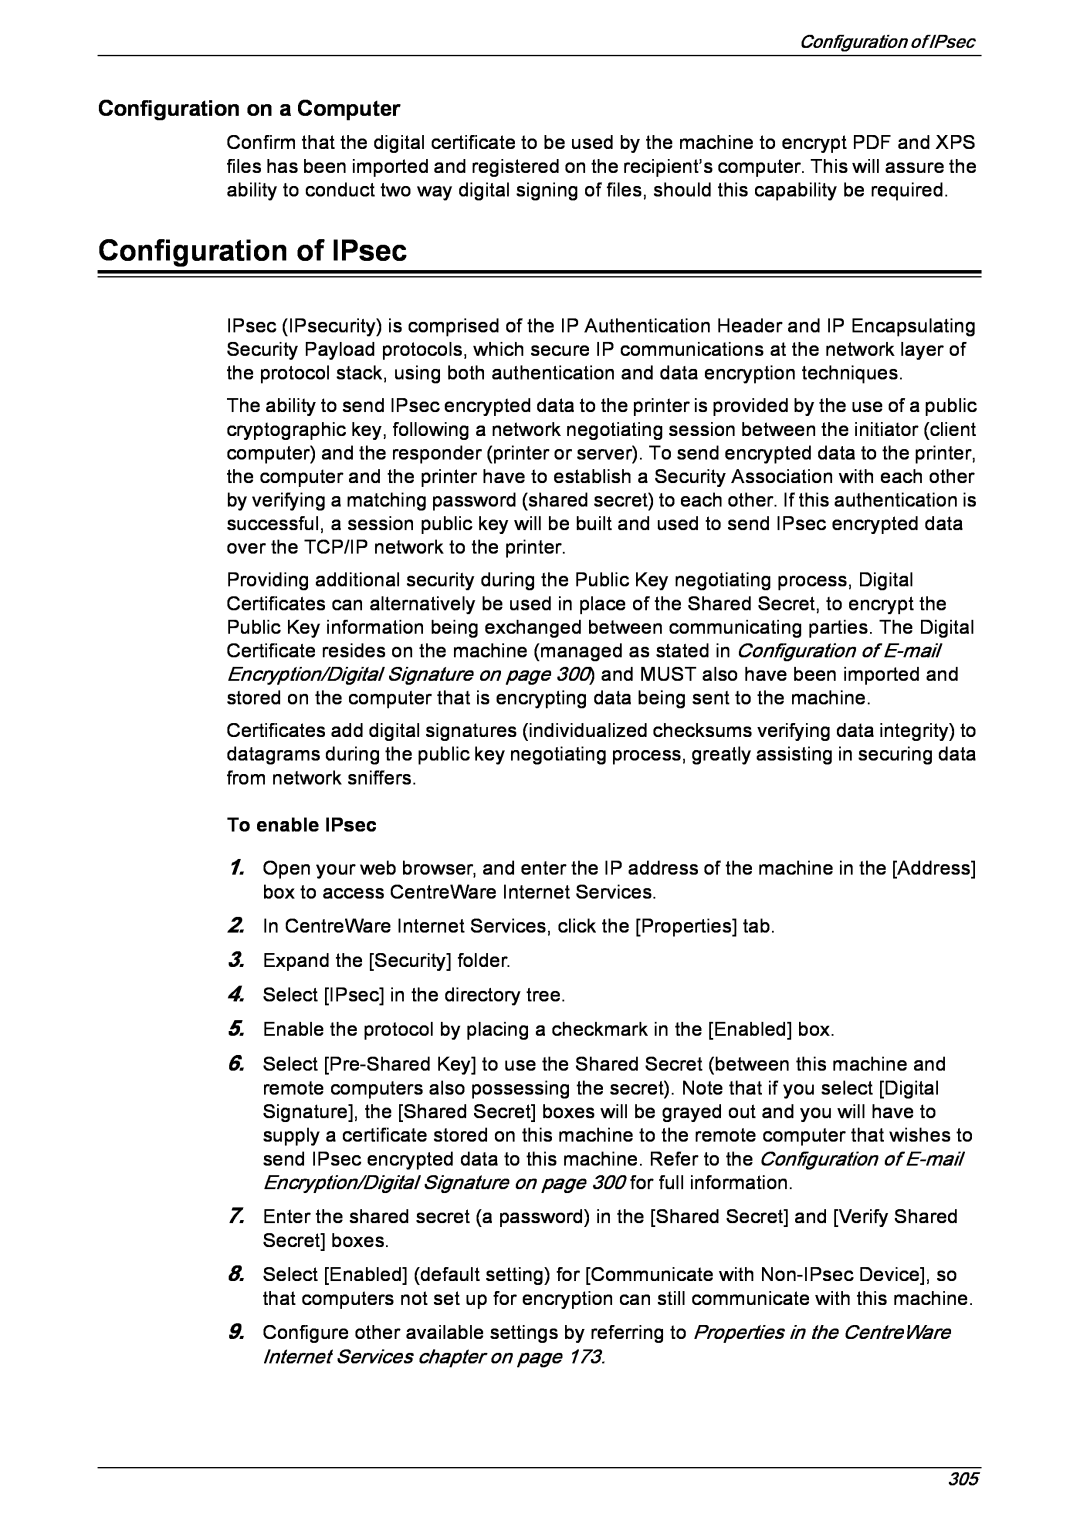 Xerox 5222 manual Configuration of IPsec, To enable IPsec 